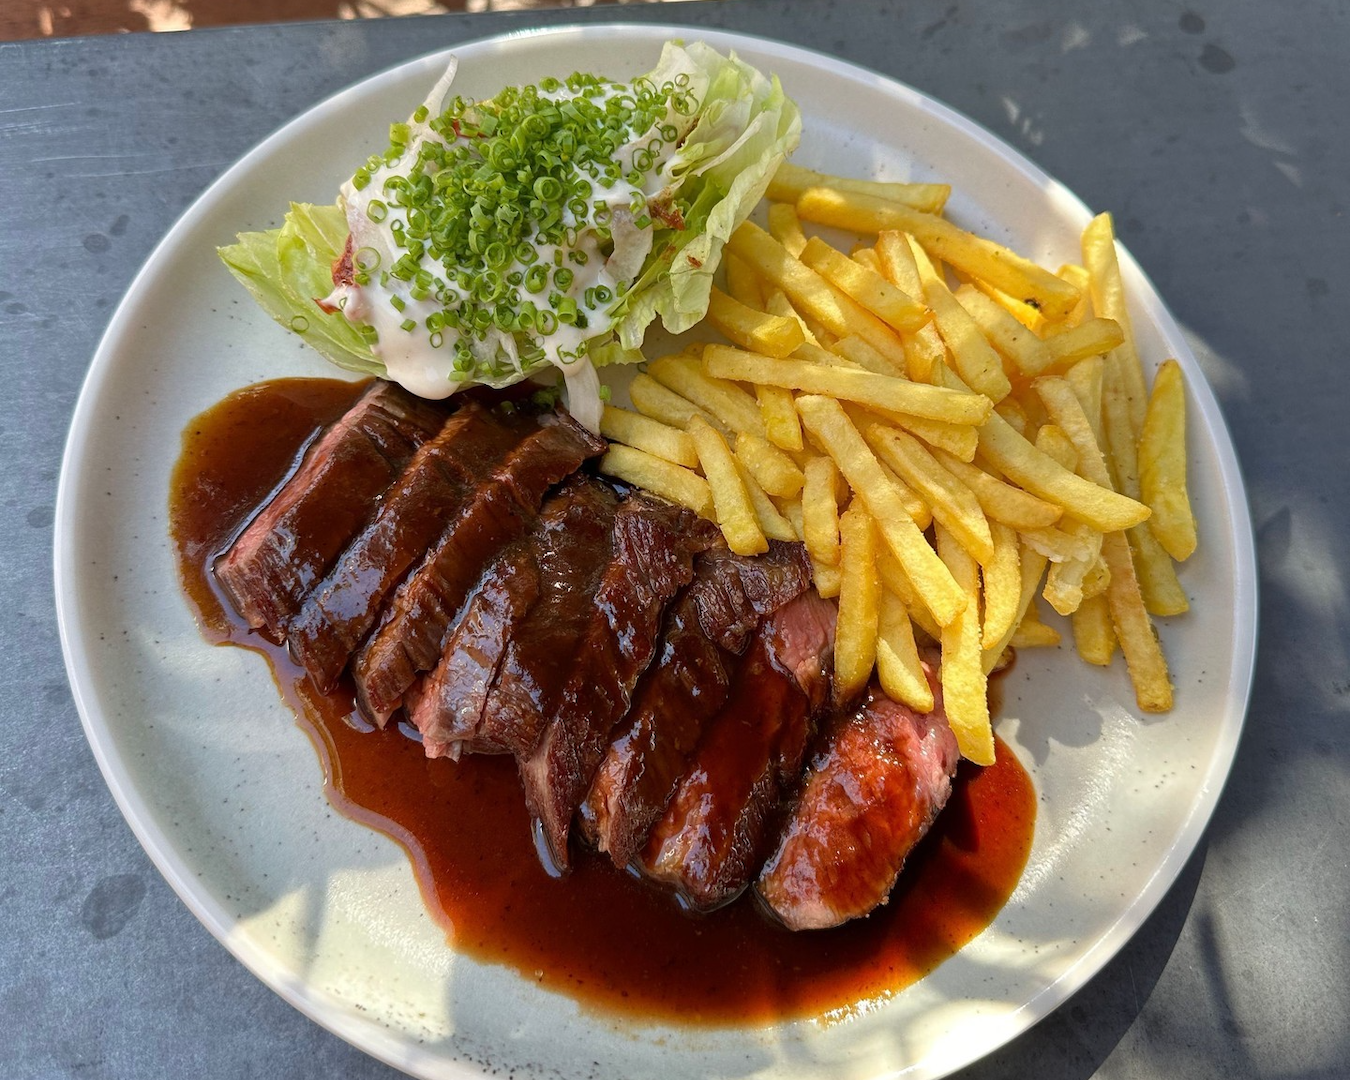 The steak frites at Bertie in Bassendean